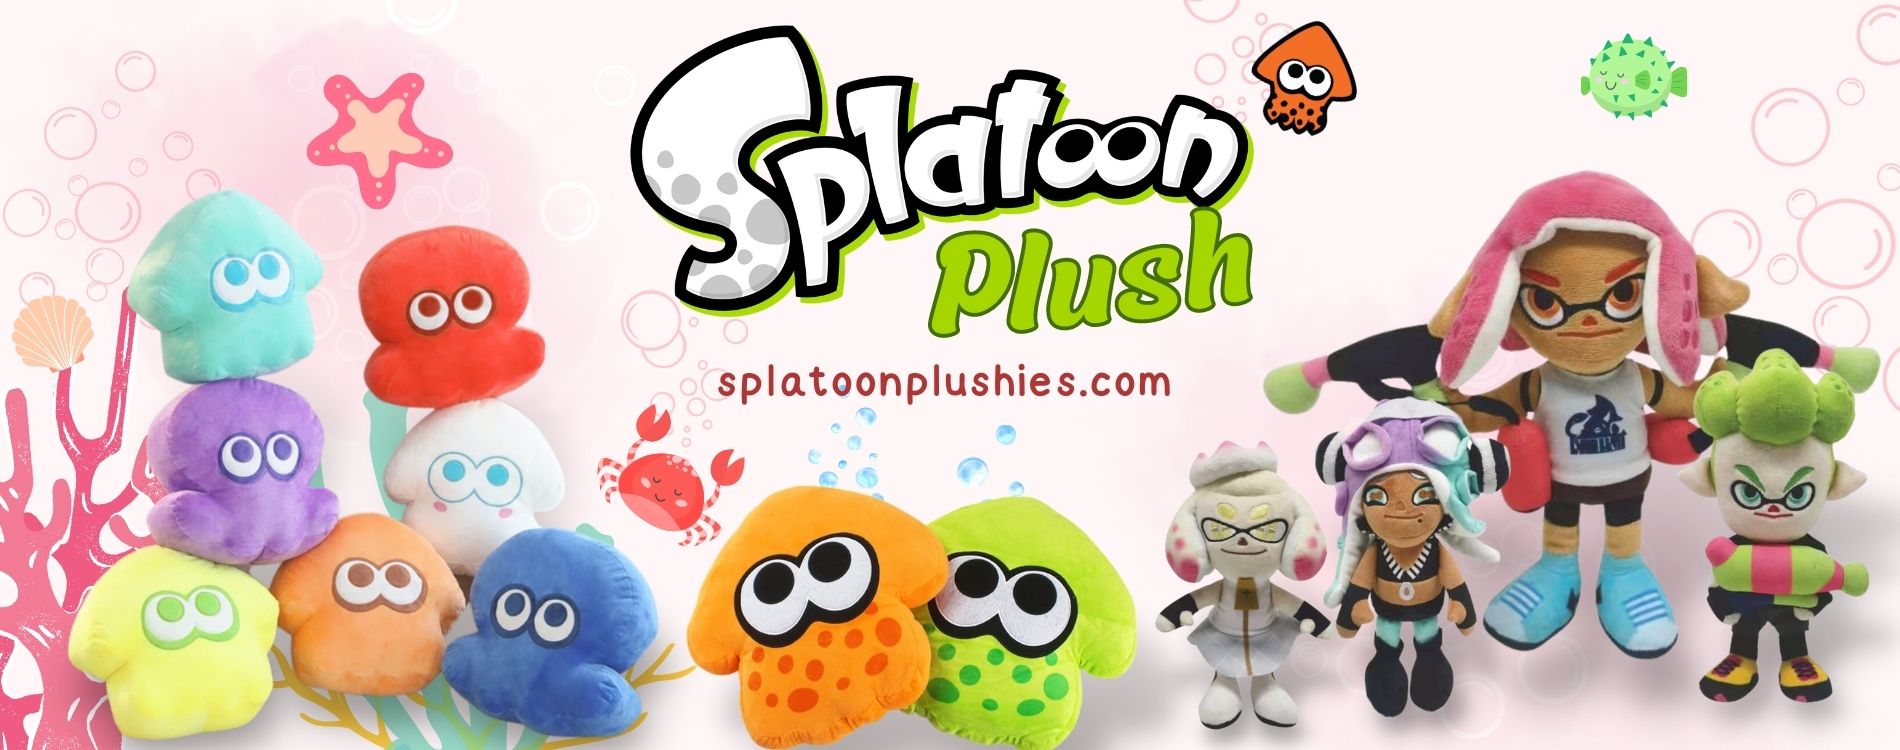 Banner 1 - Splatoon Plush